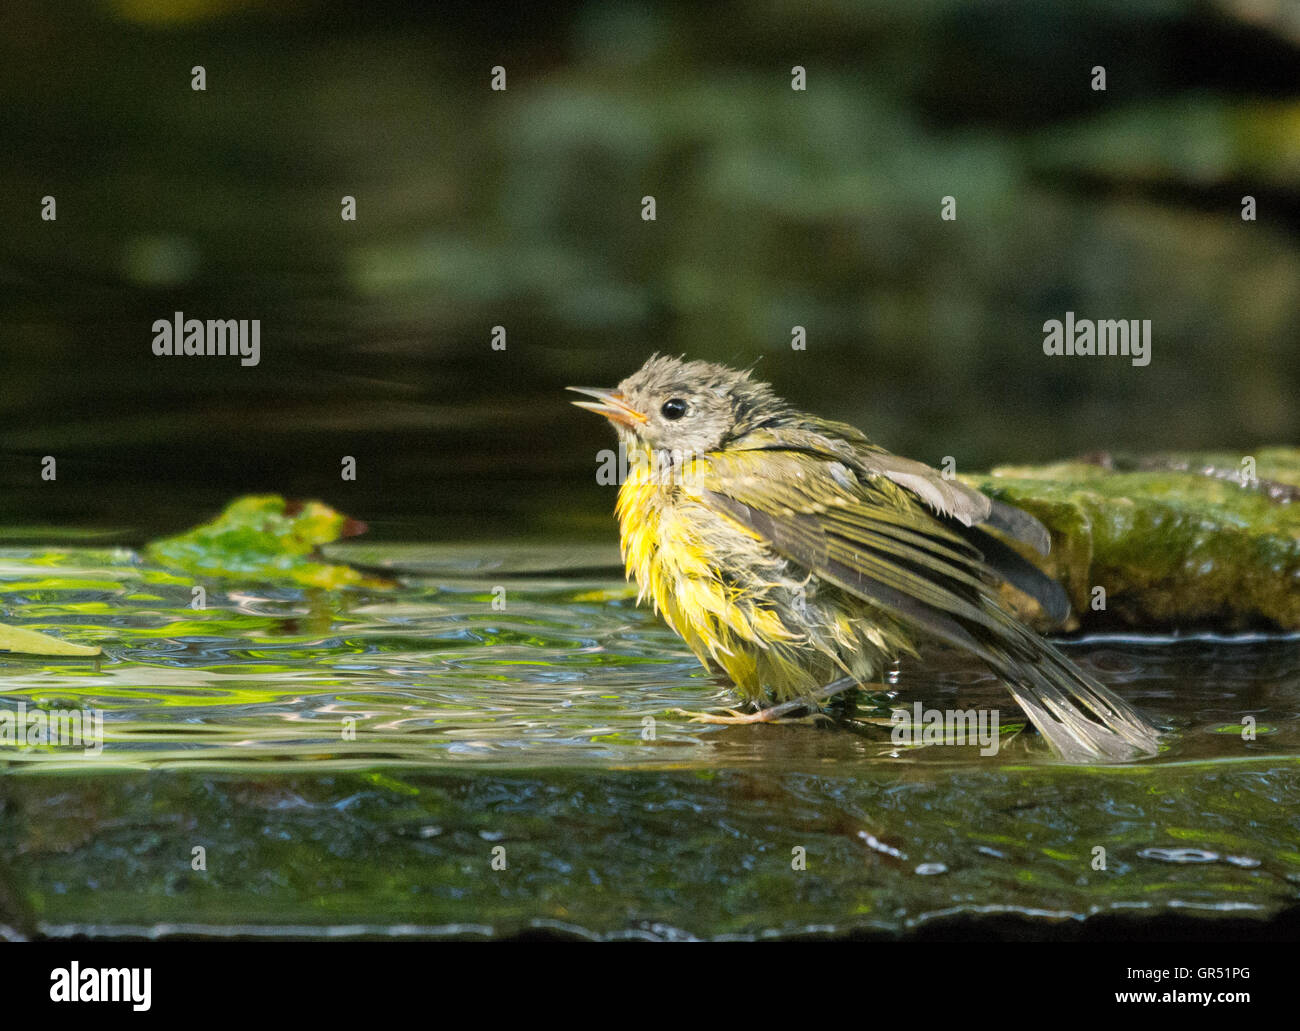 Warbler taking a bath in a birdbath Stock Photo